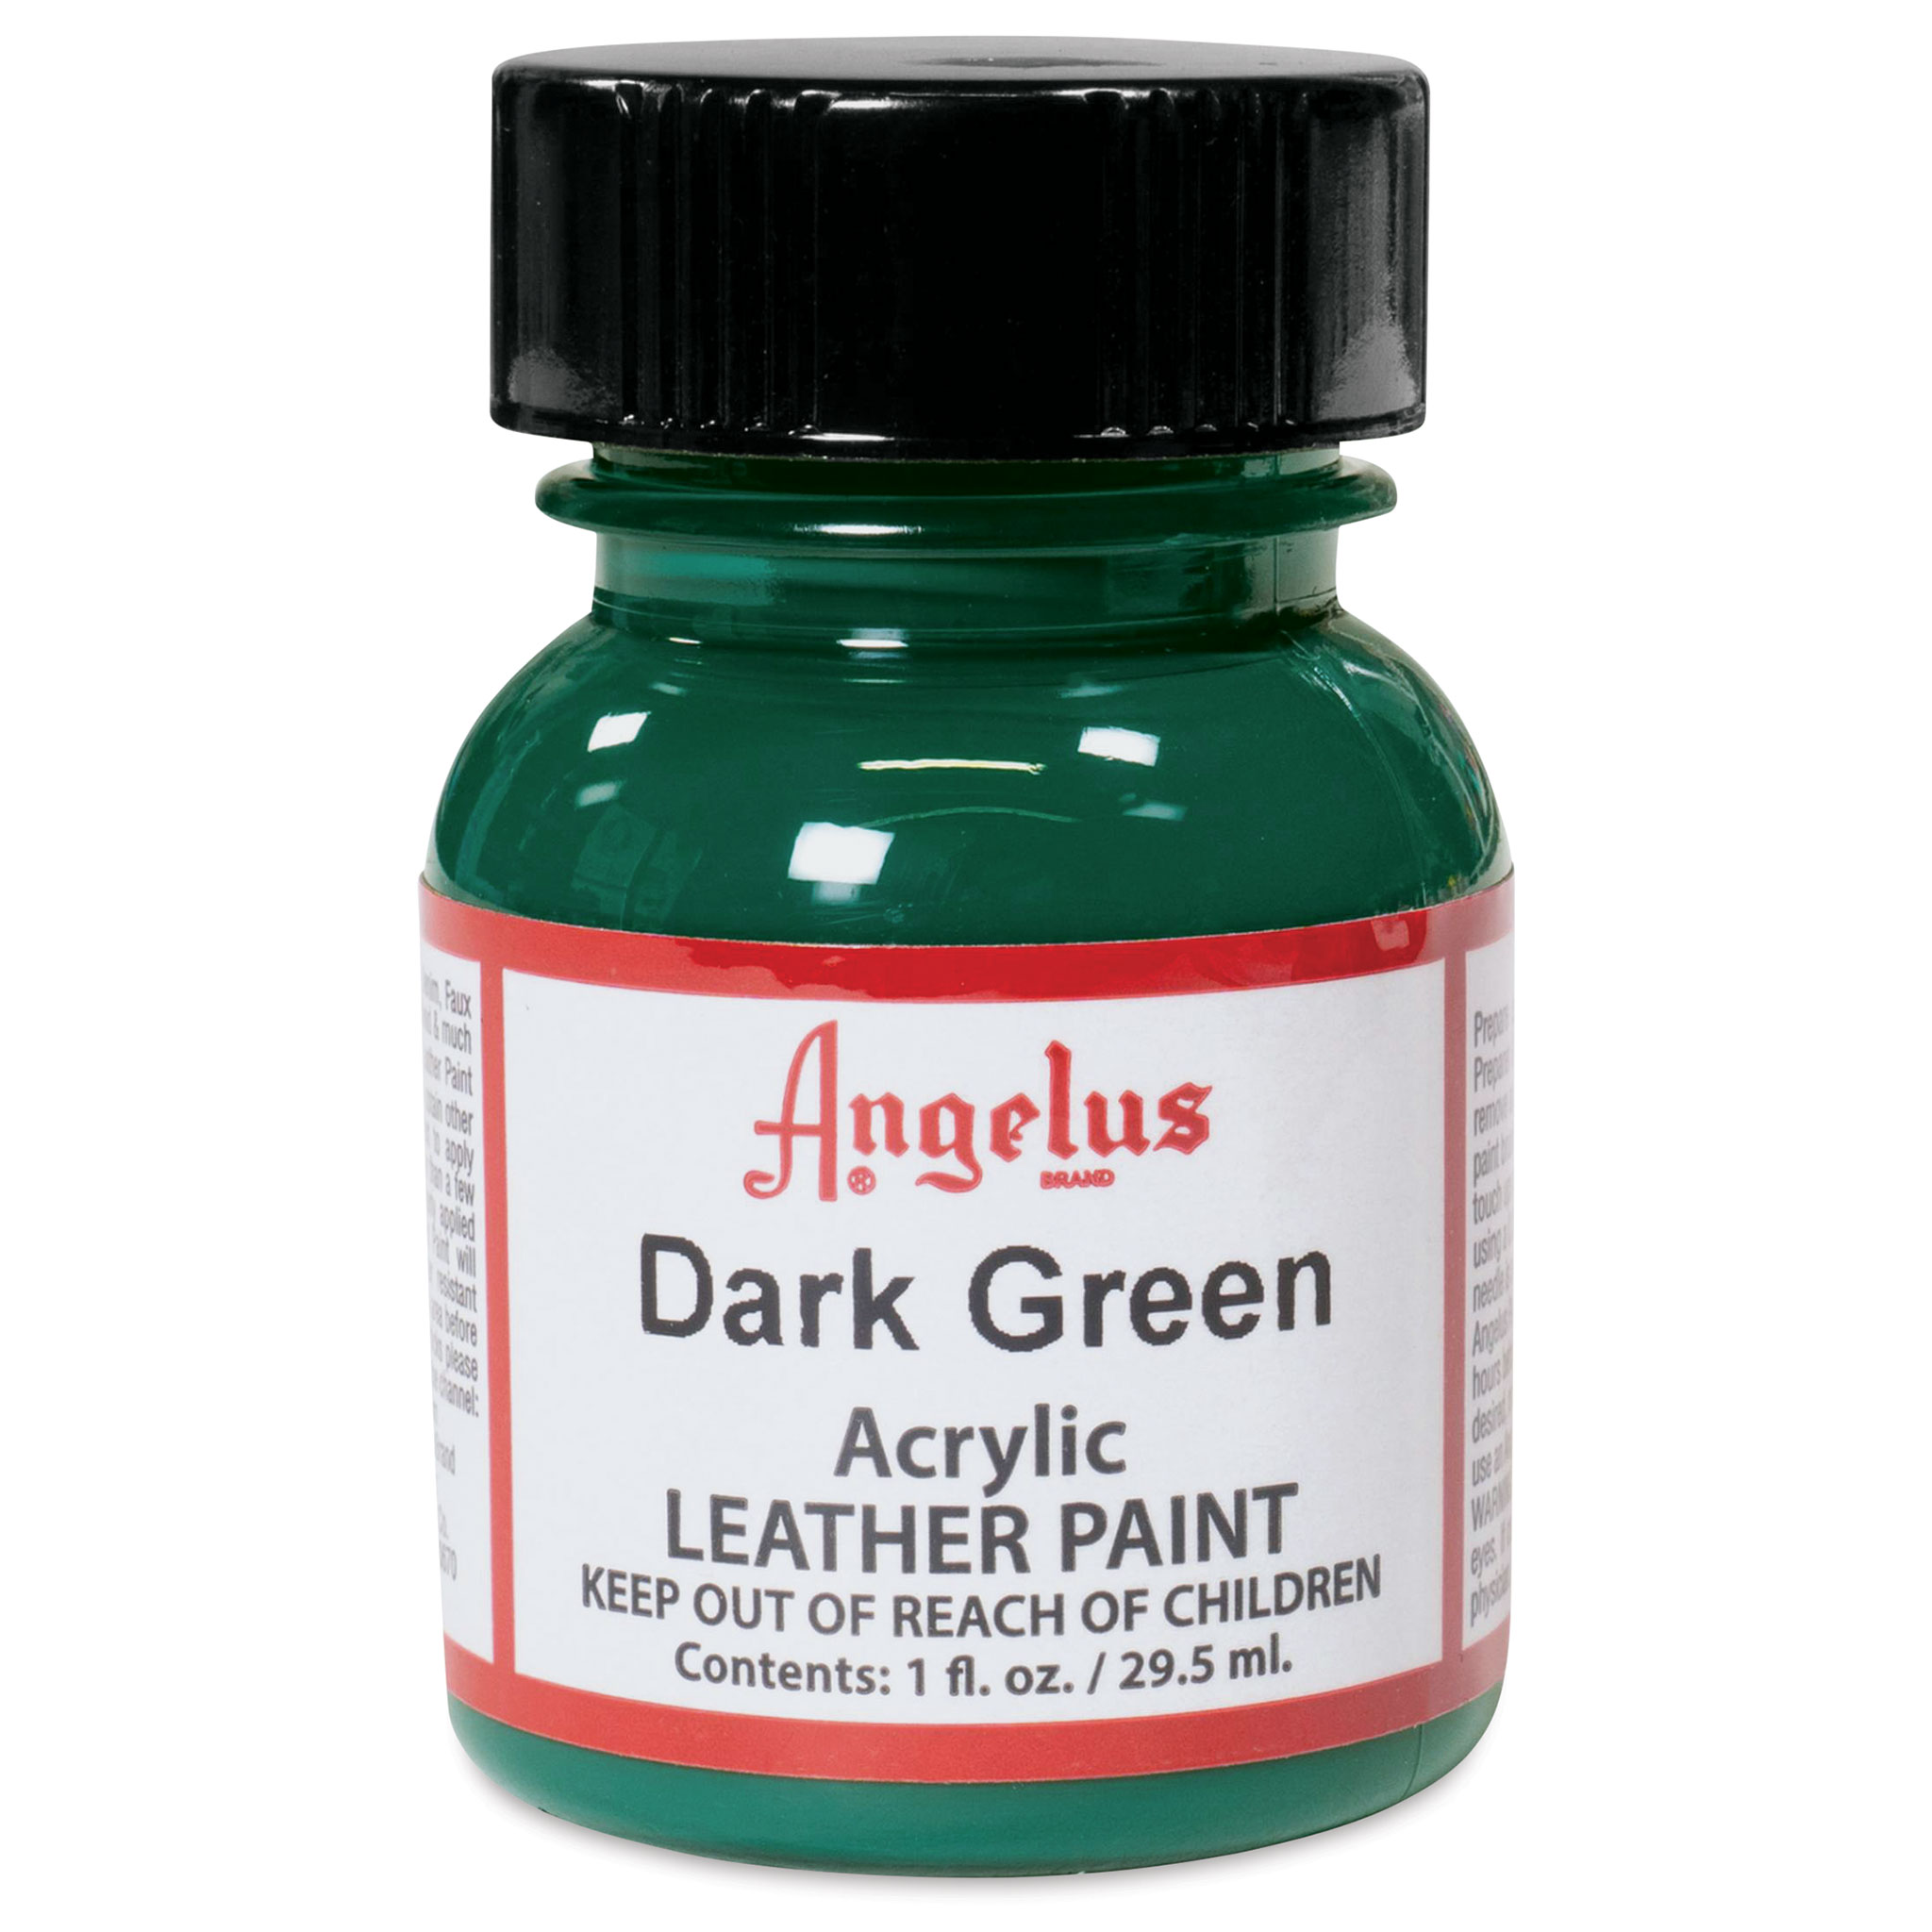 Angelus Acrylic Leather Paint - Dark Green, 1 oz